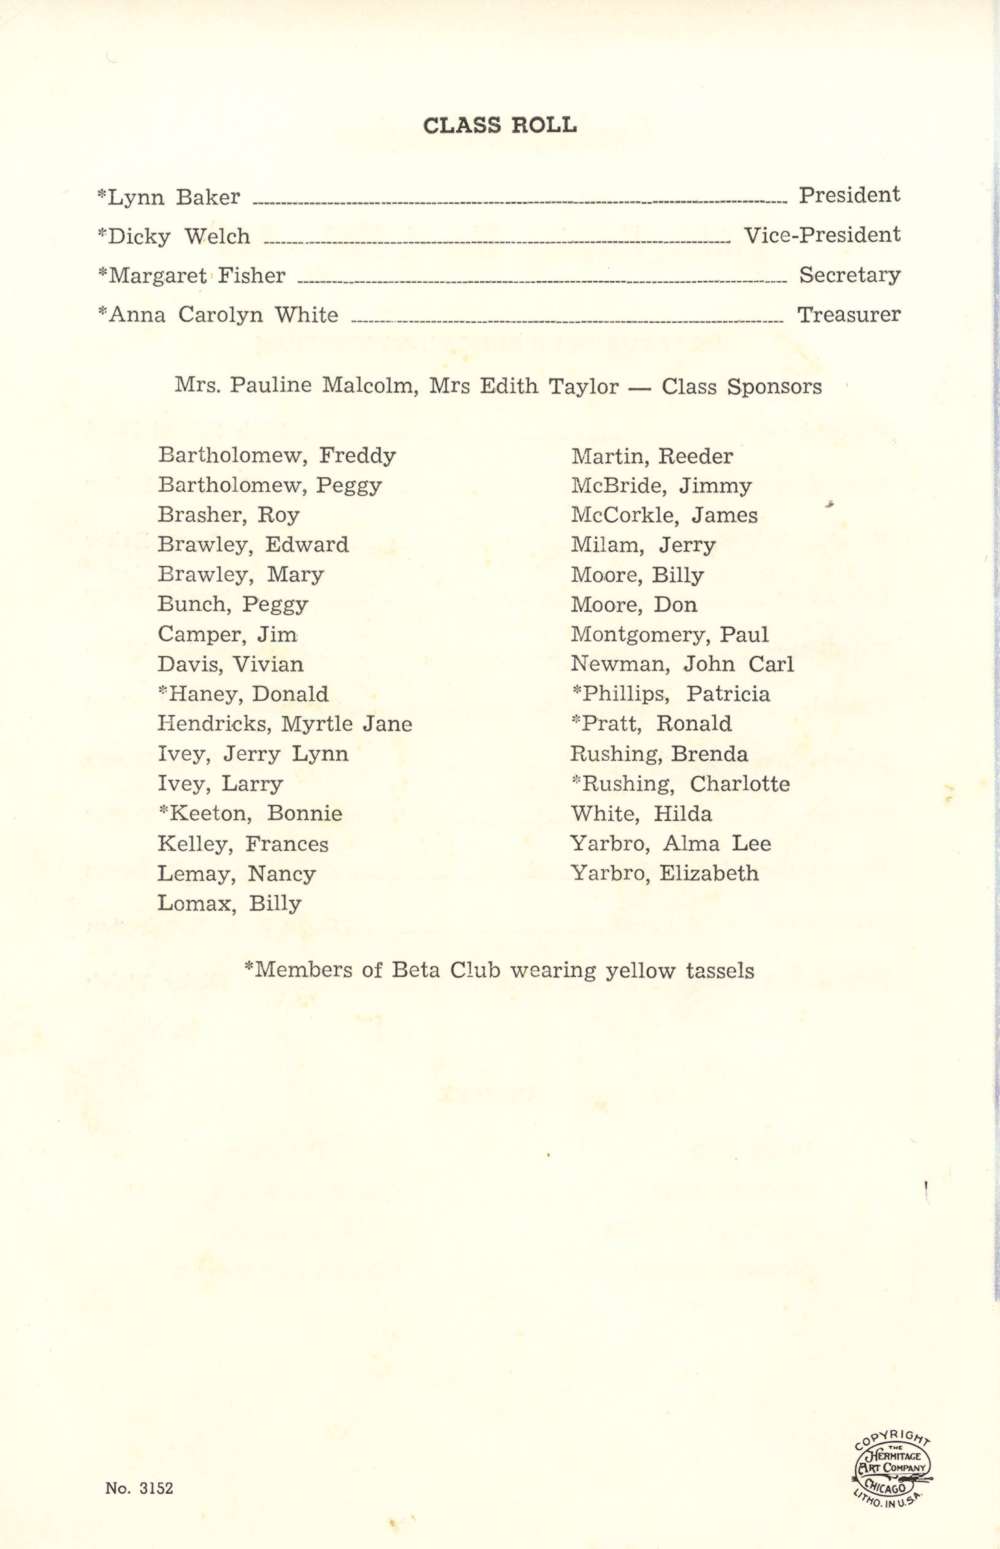 DHS 1962 Graduation Program